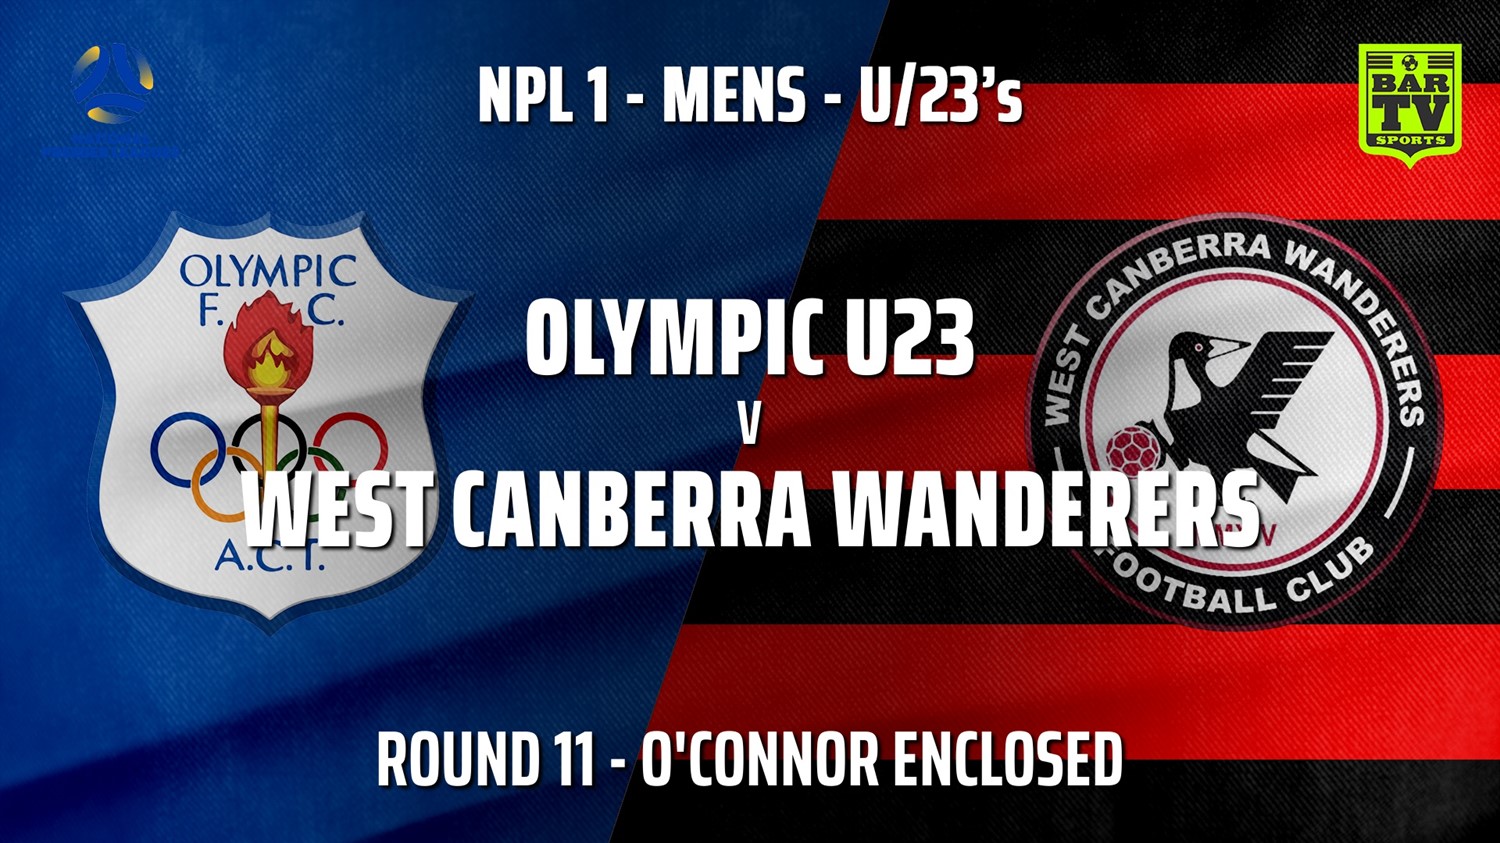 210626-Capital NPL U23 Round 11 - Canberra Olympic U23 v West Canberra Wanderers U23s Minigame Slate Image